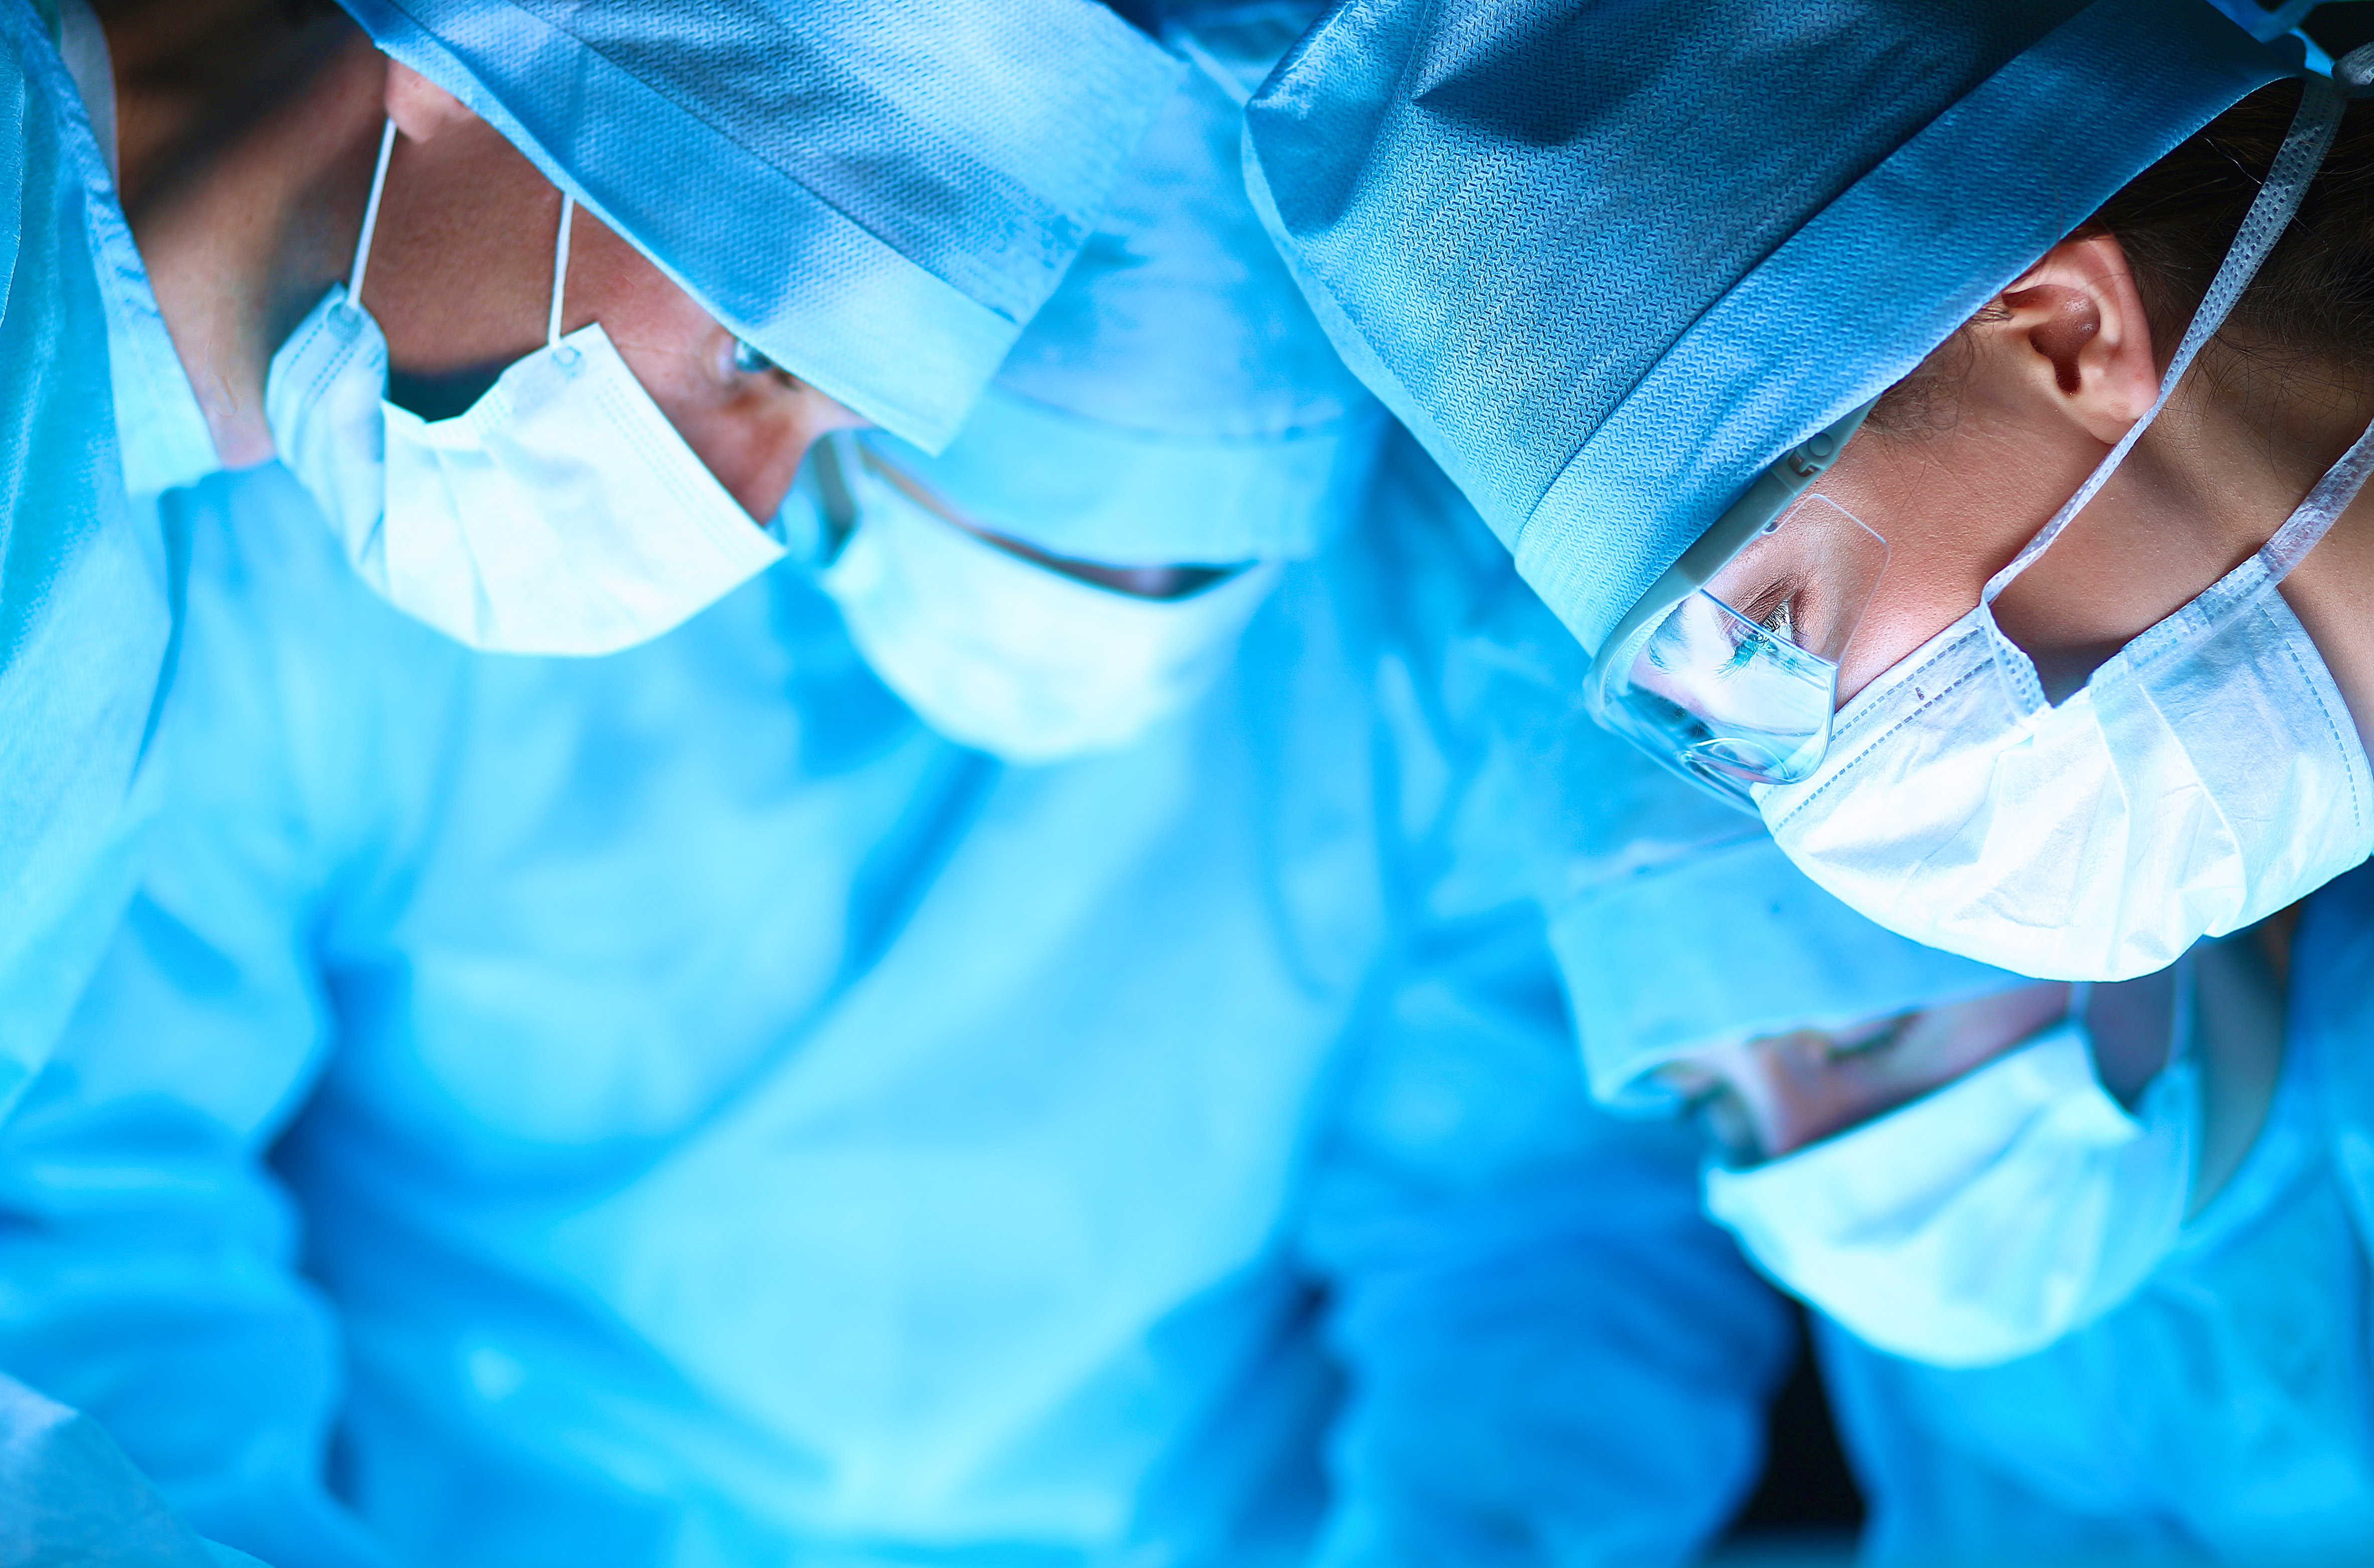 A team of surgeons | Source: Shutterstock